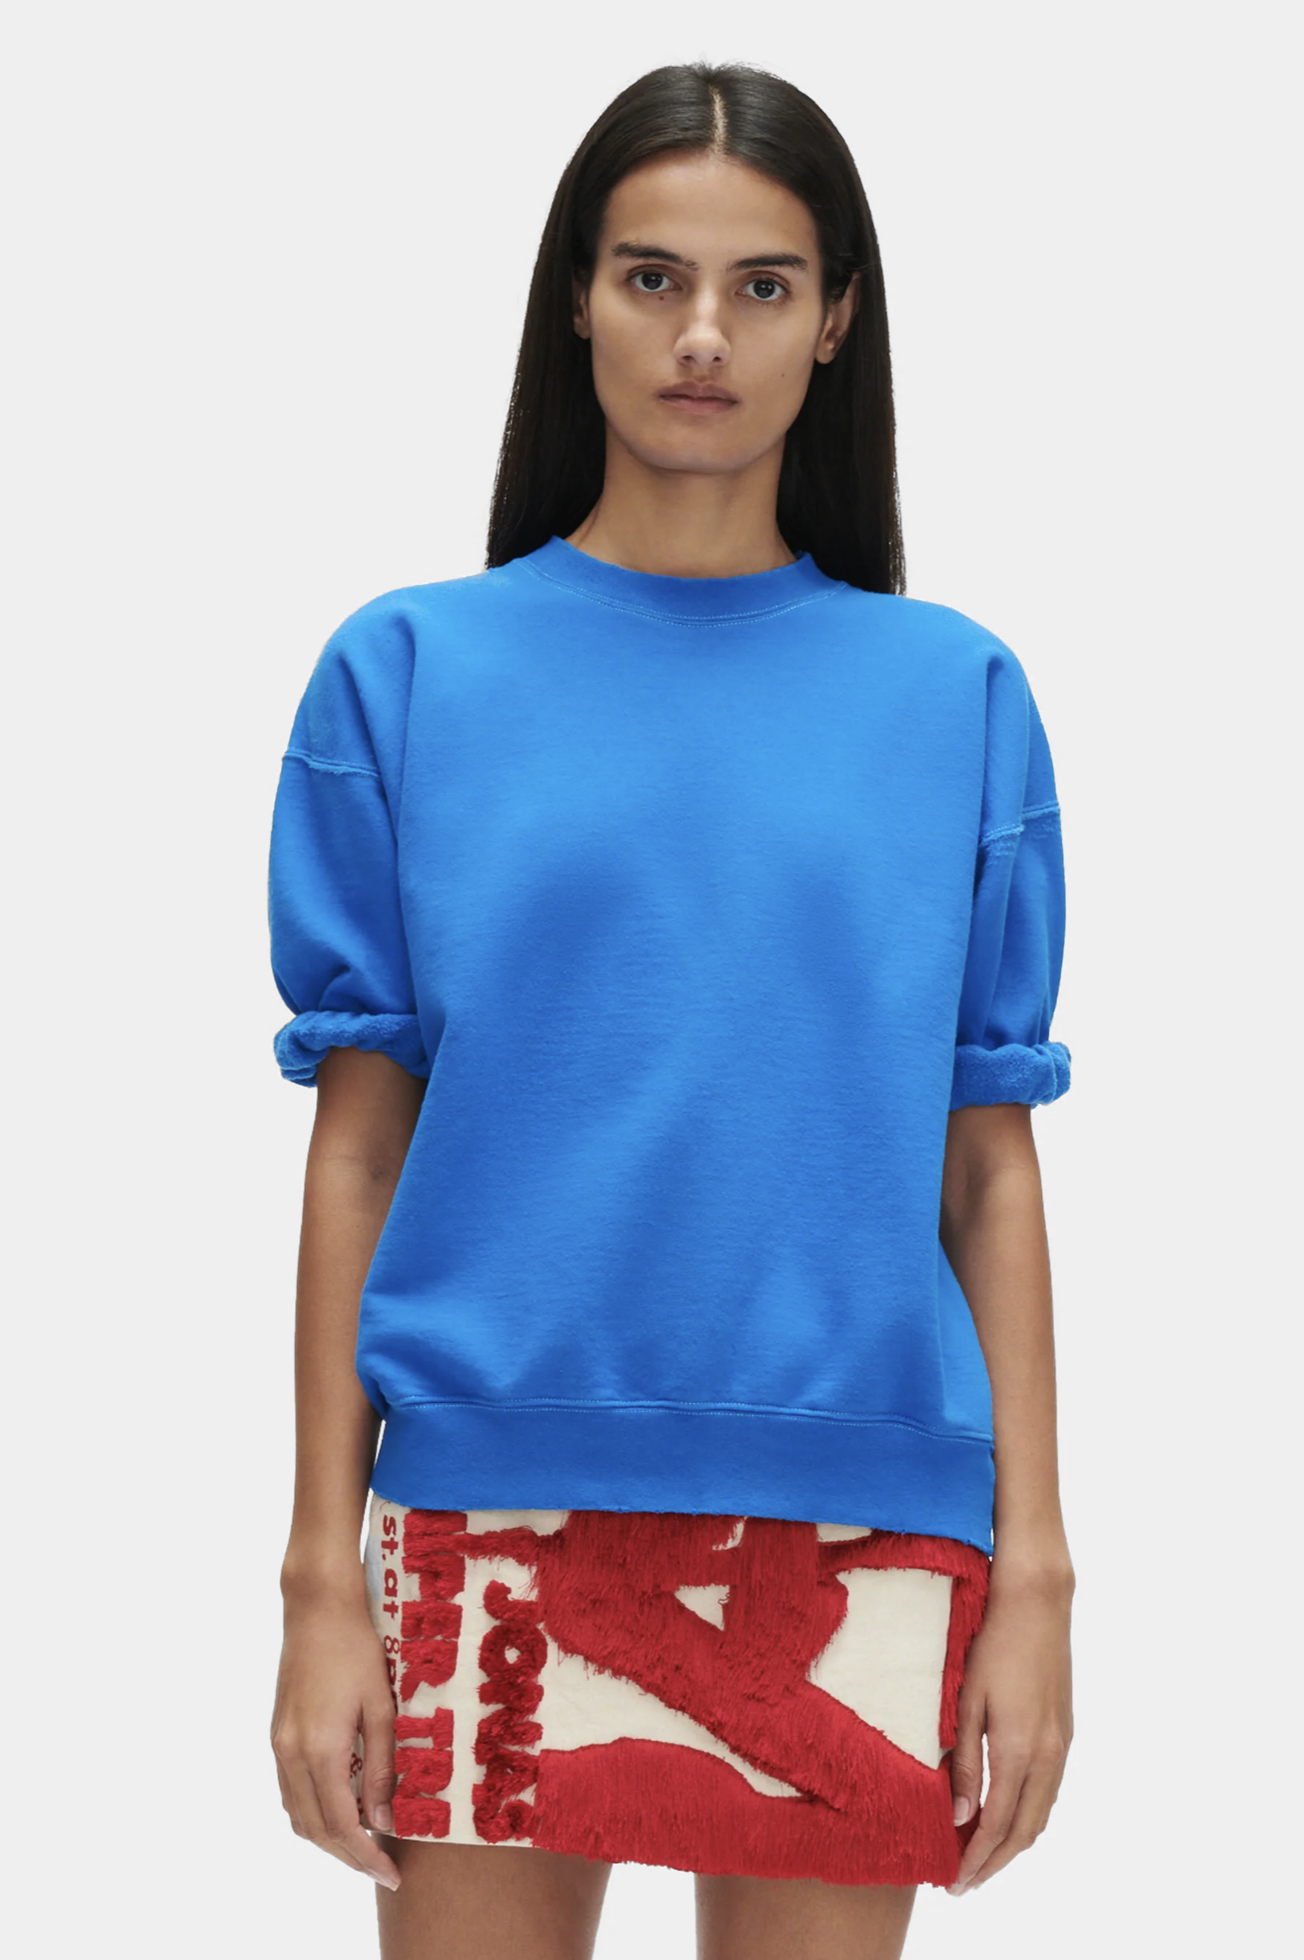 Stanza Sweatshirt in Royal by Rachel Comey